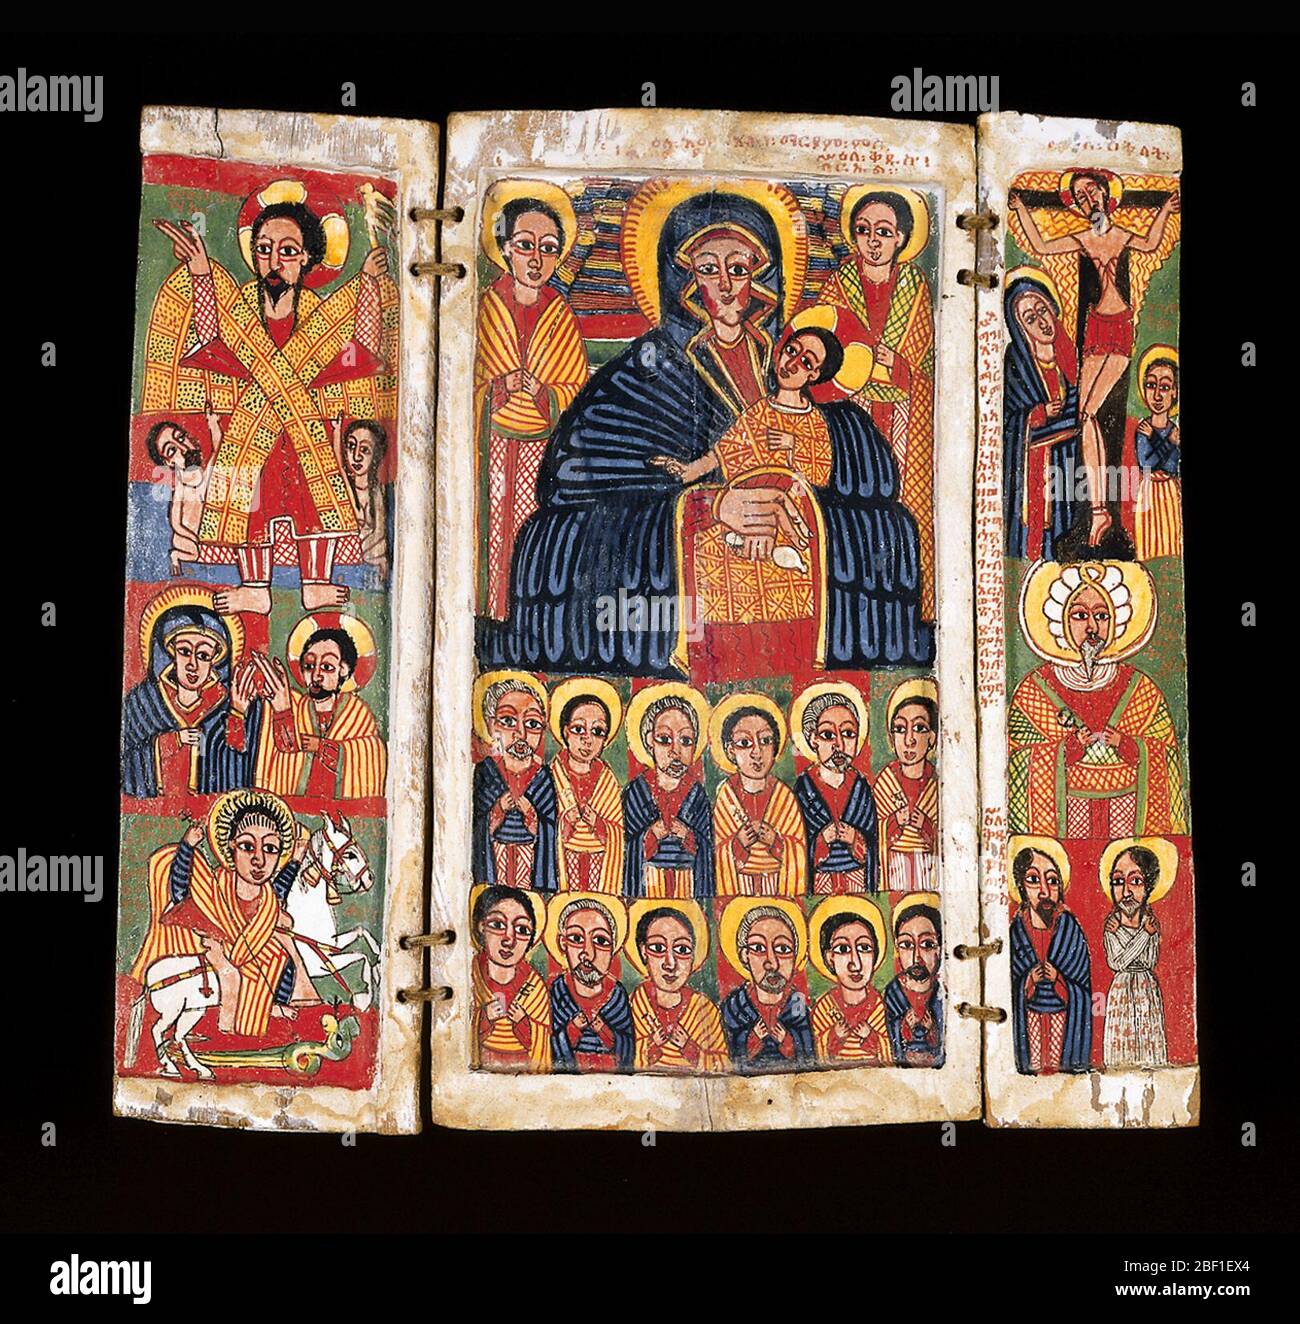 Ortodossa etiopica; Etiopia; metà del XVII secolo; distemper e gesso su legno; a x L x P: 30.2 x 15.9 x 2.9 cm (11 7/8 x 6 1/4 x 1 1/8 in.) Foto Stock